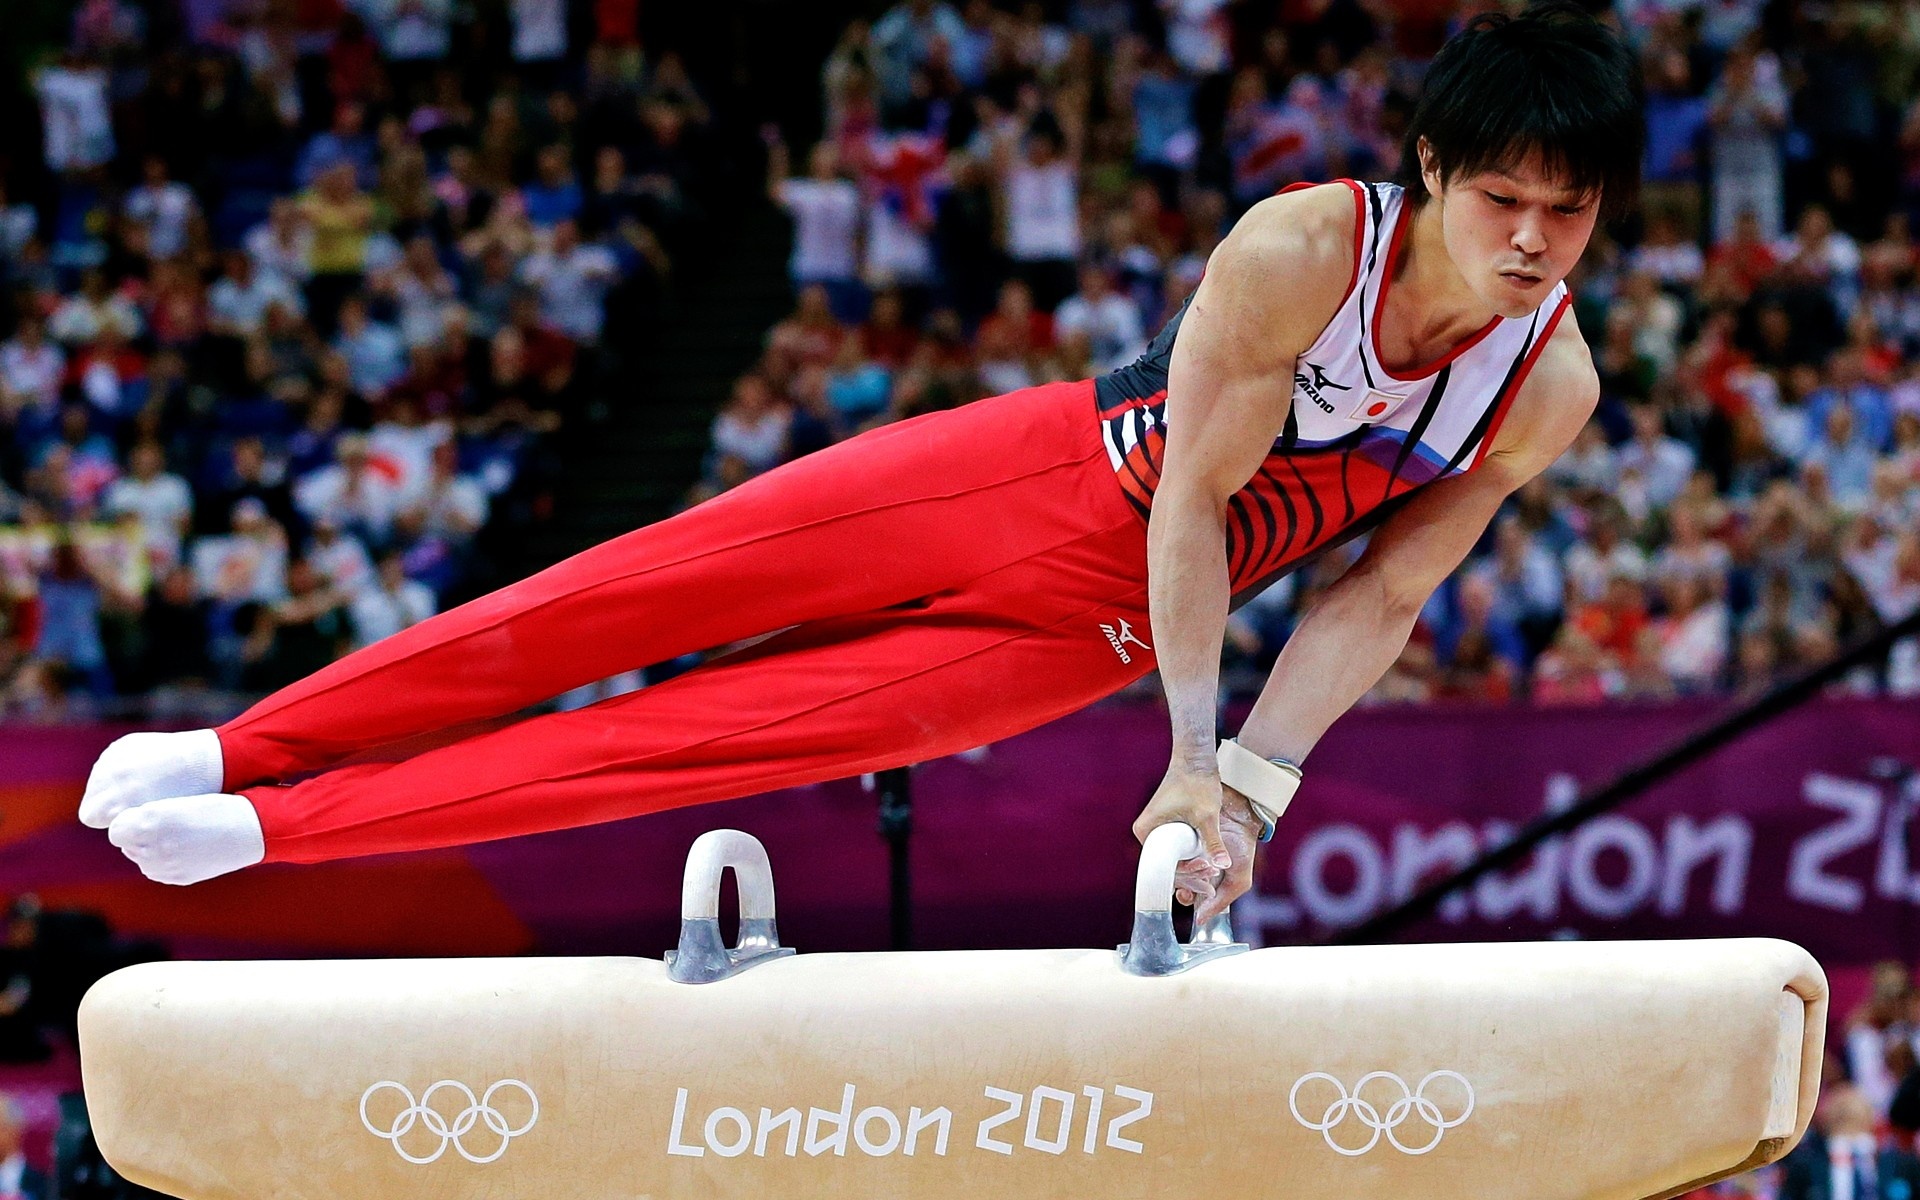 Acrobatic Sports: Japanese gymnast, Olympics 2012, Kohei Uchimura, A seven-time Olympic medalist. 1920x1200 HD Wallpaper.